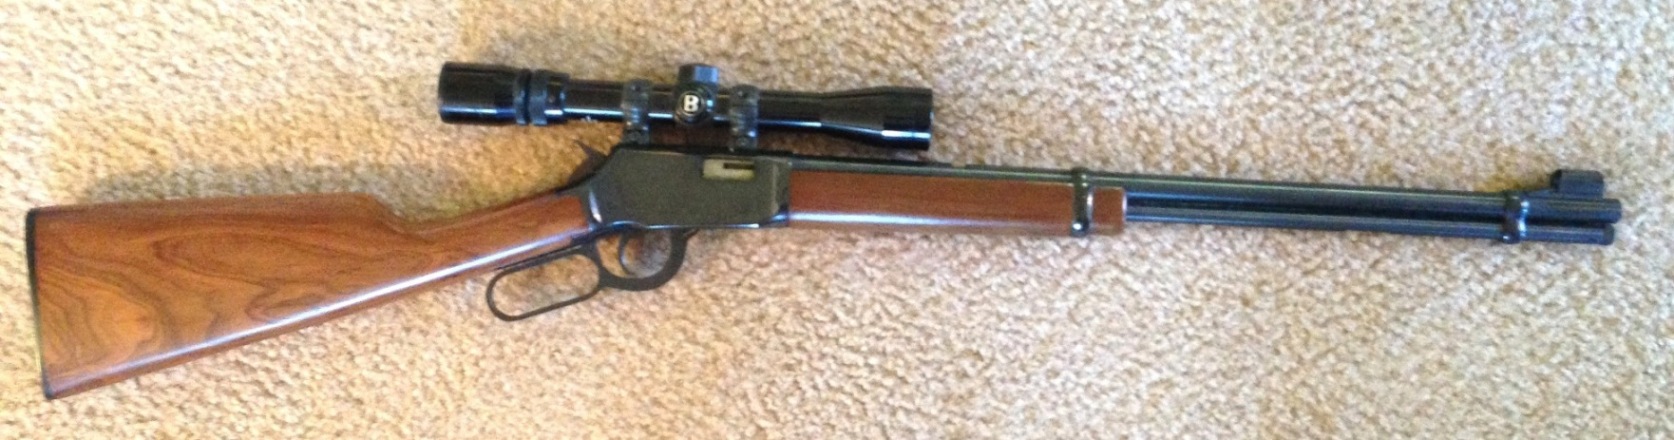 My Winchester 9422 Ready copy 2.JPG